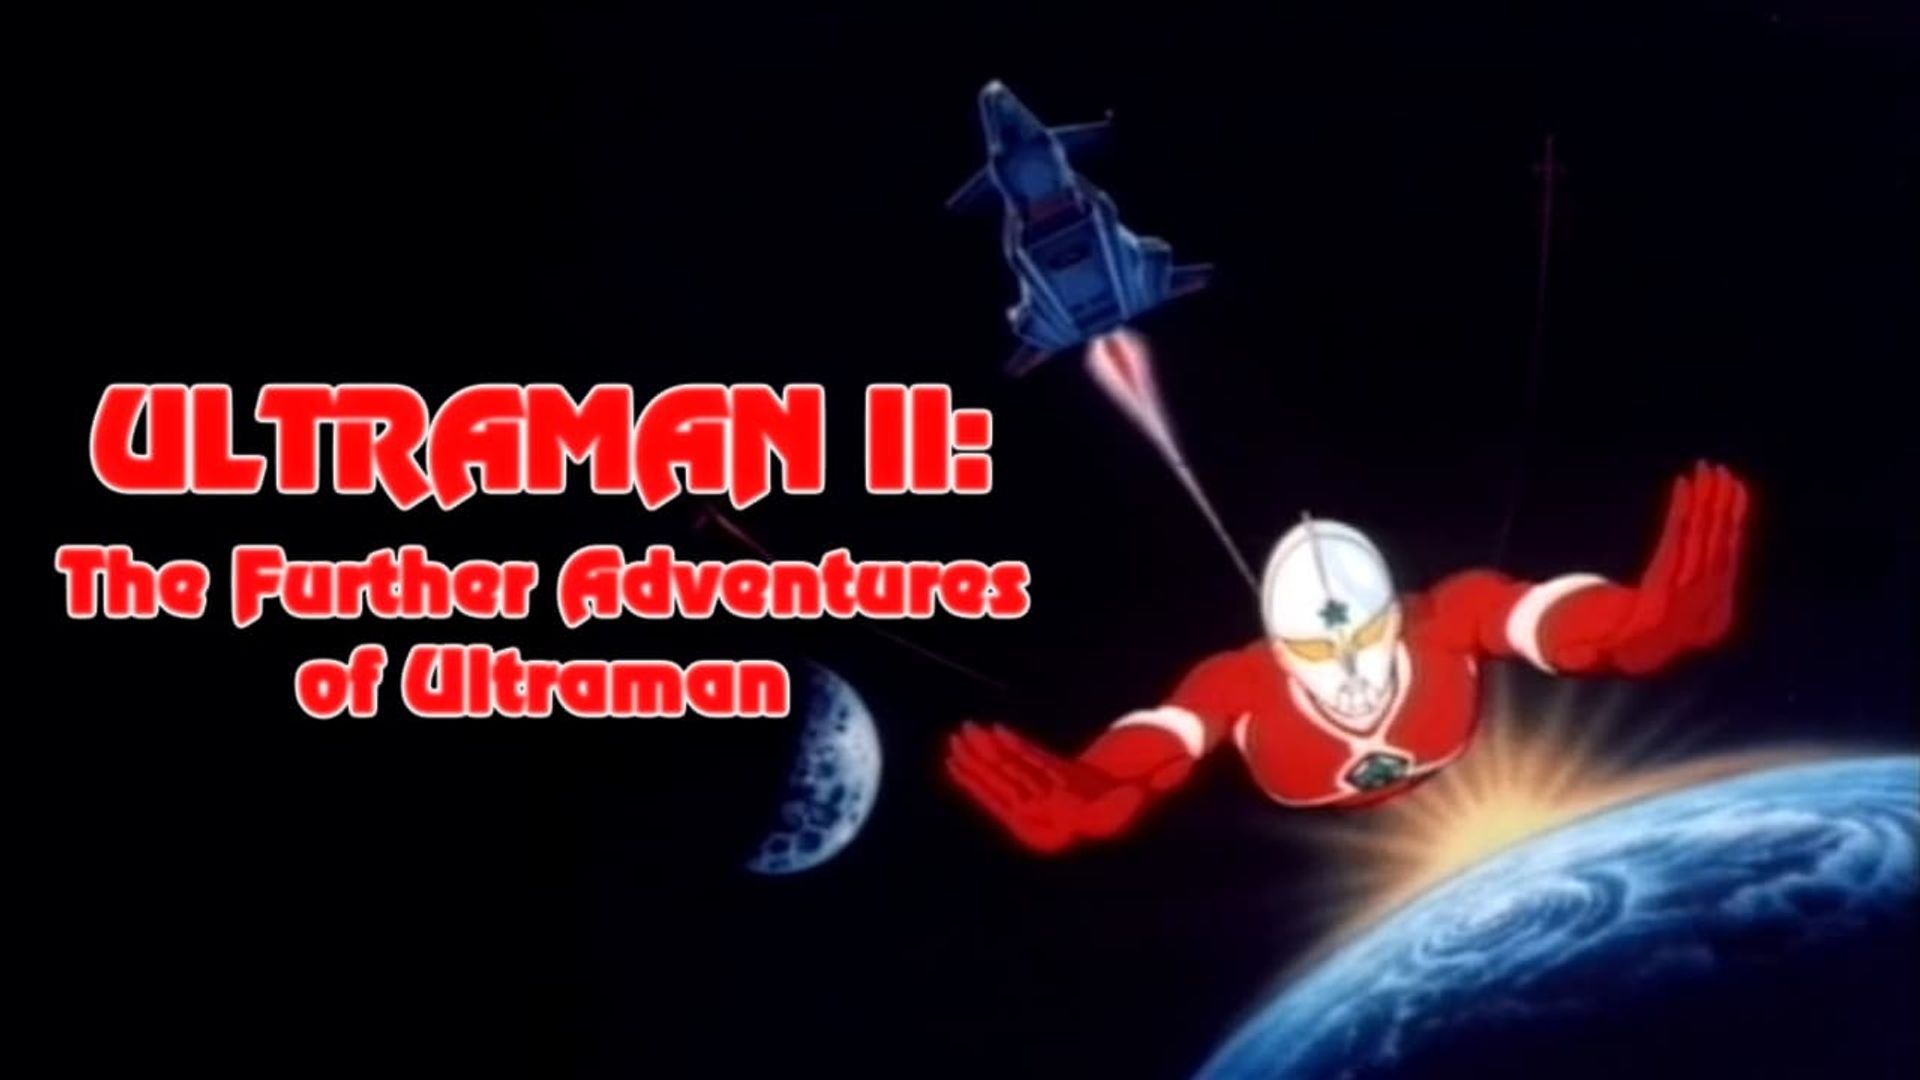 Ultraman II: The Further Adventures of Ultraman background